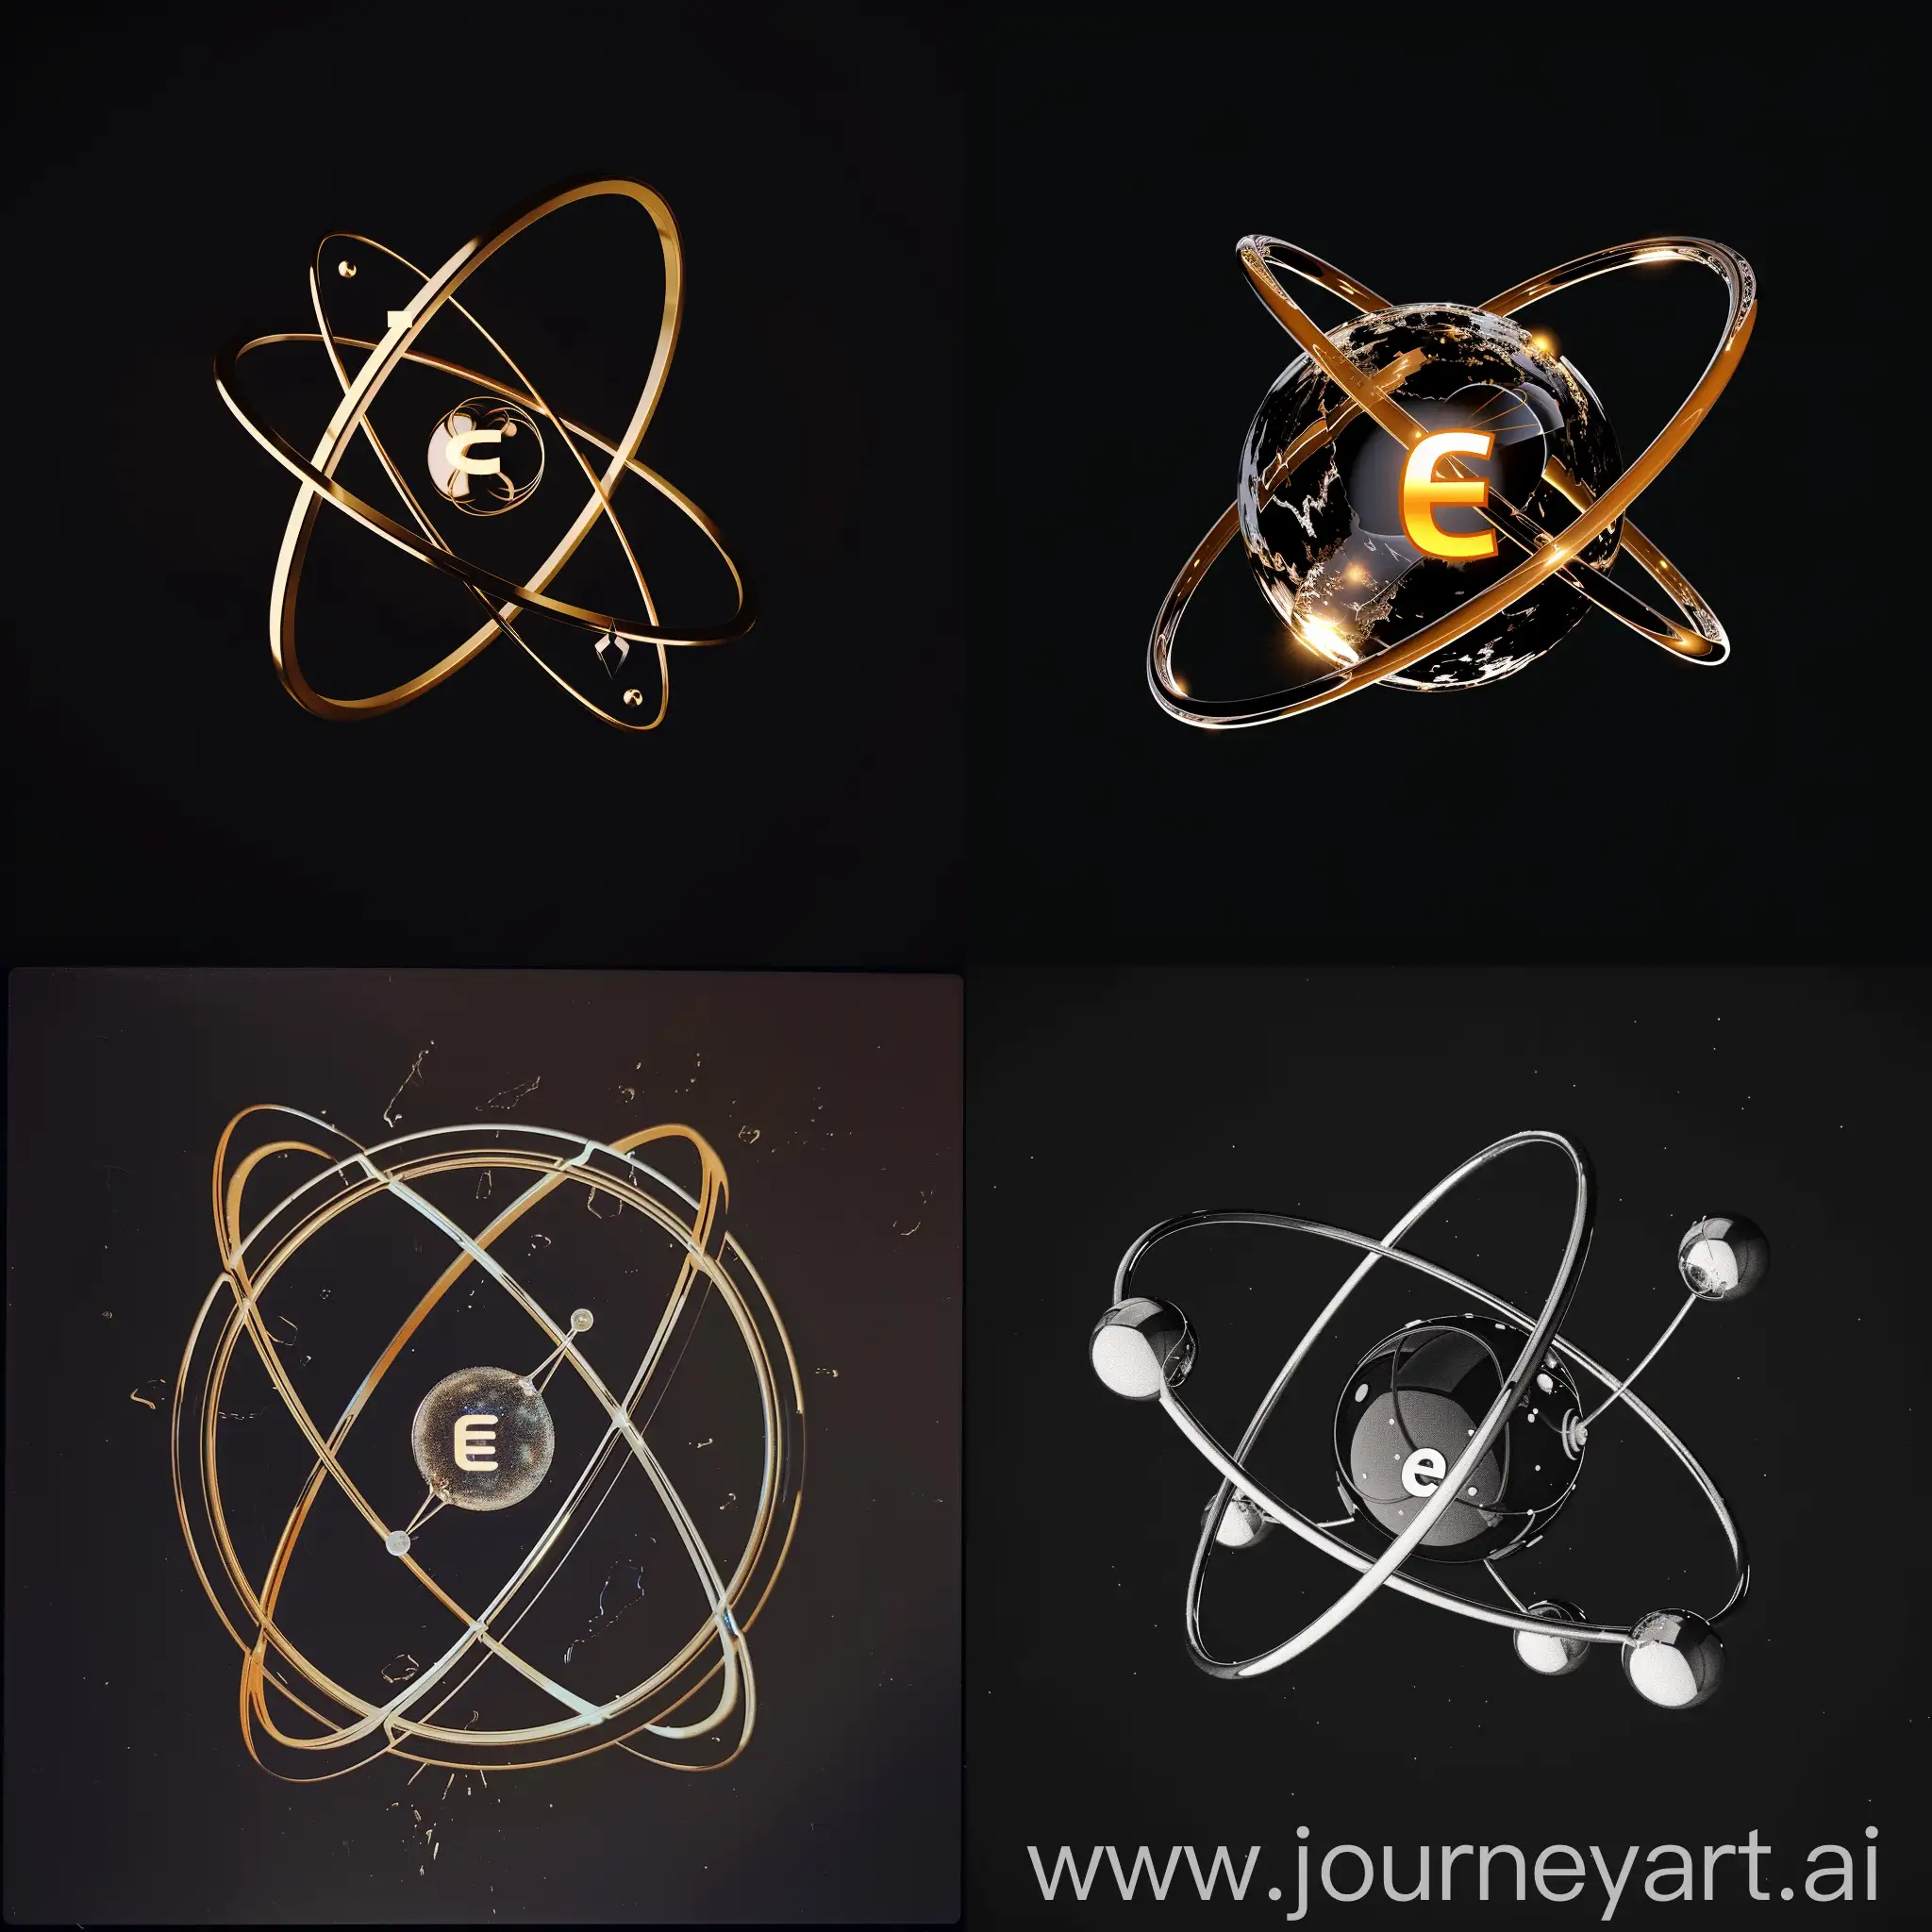 Electron-Orbiting-Atom-Nucleus-with-Flashy-Ring